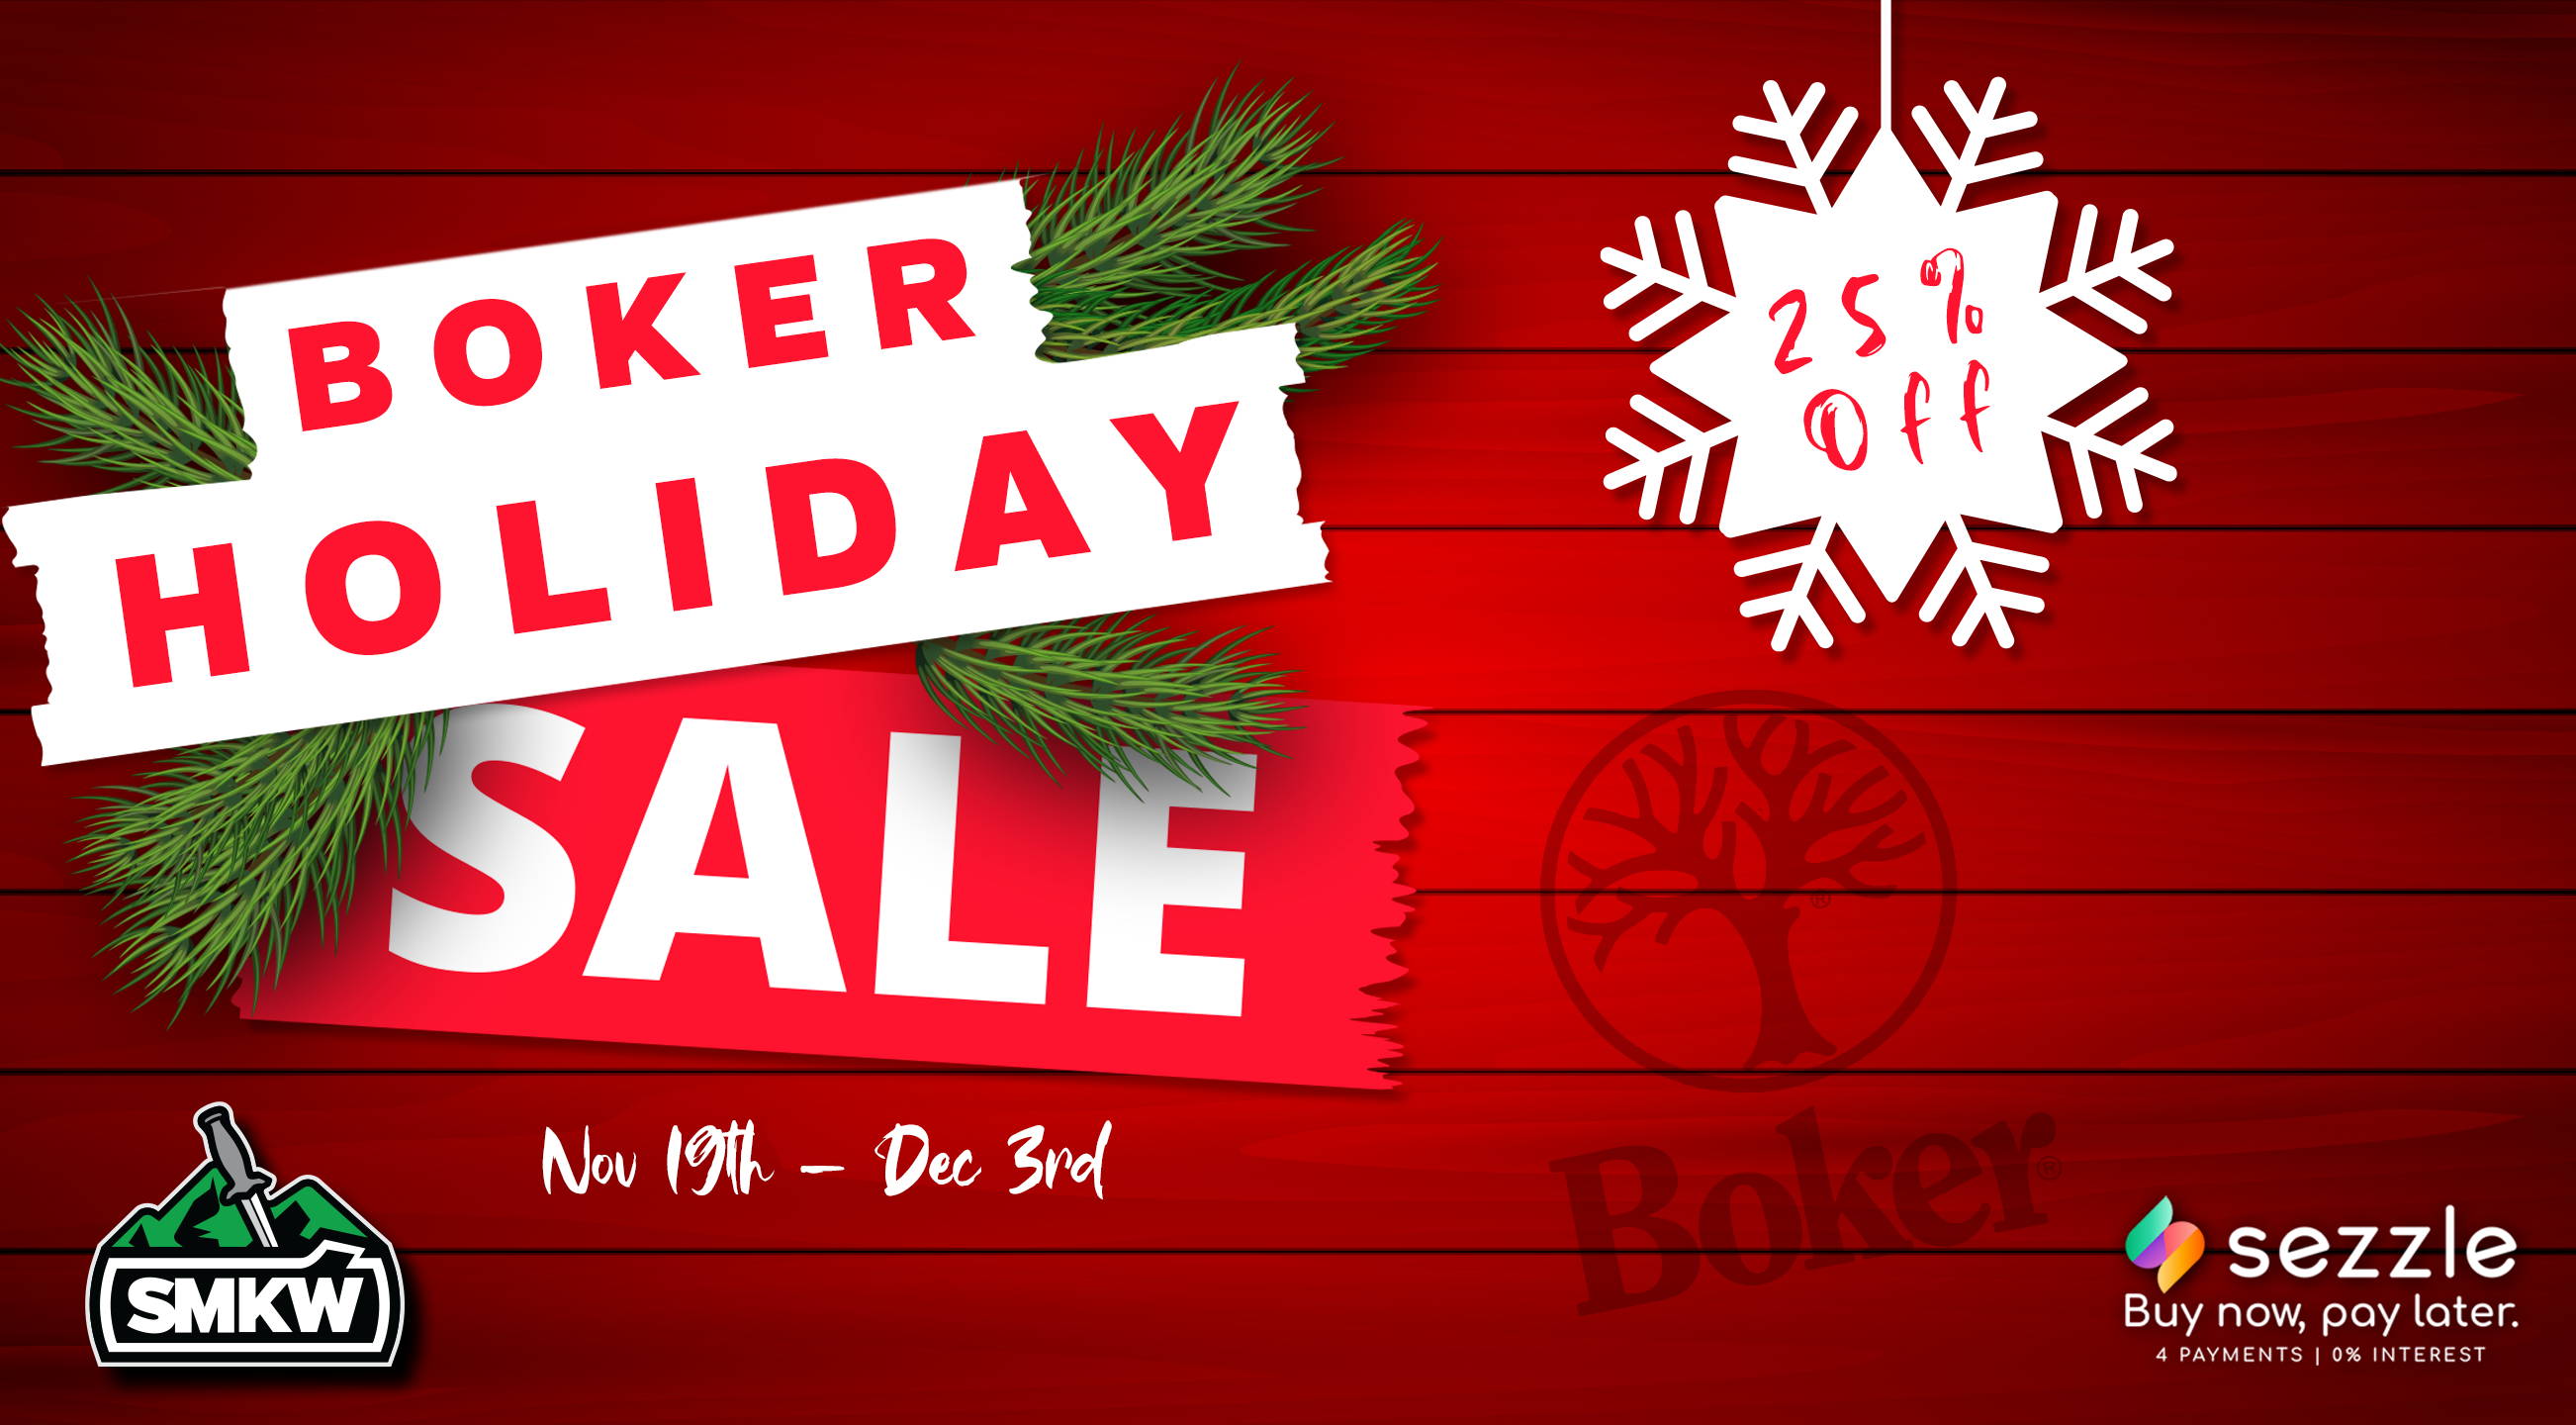 Boker Holiday Sale! 25% Off In Stock Boker!